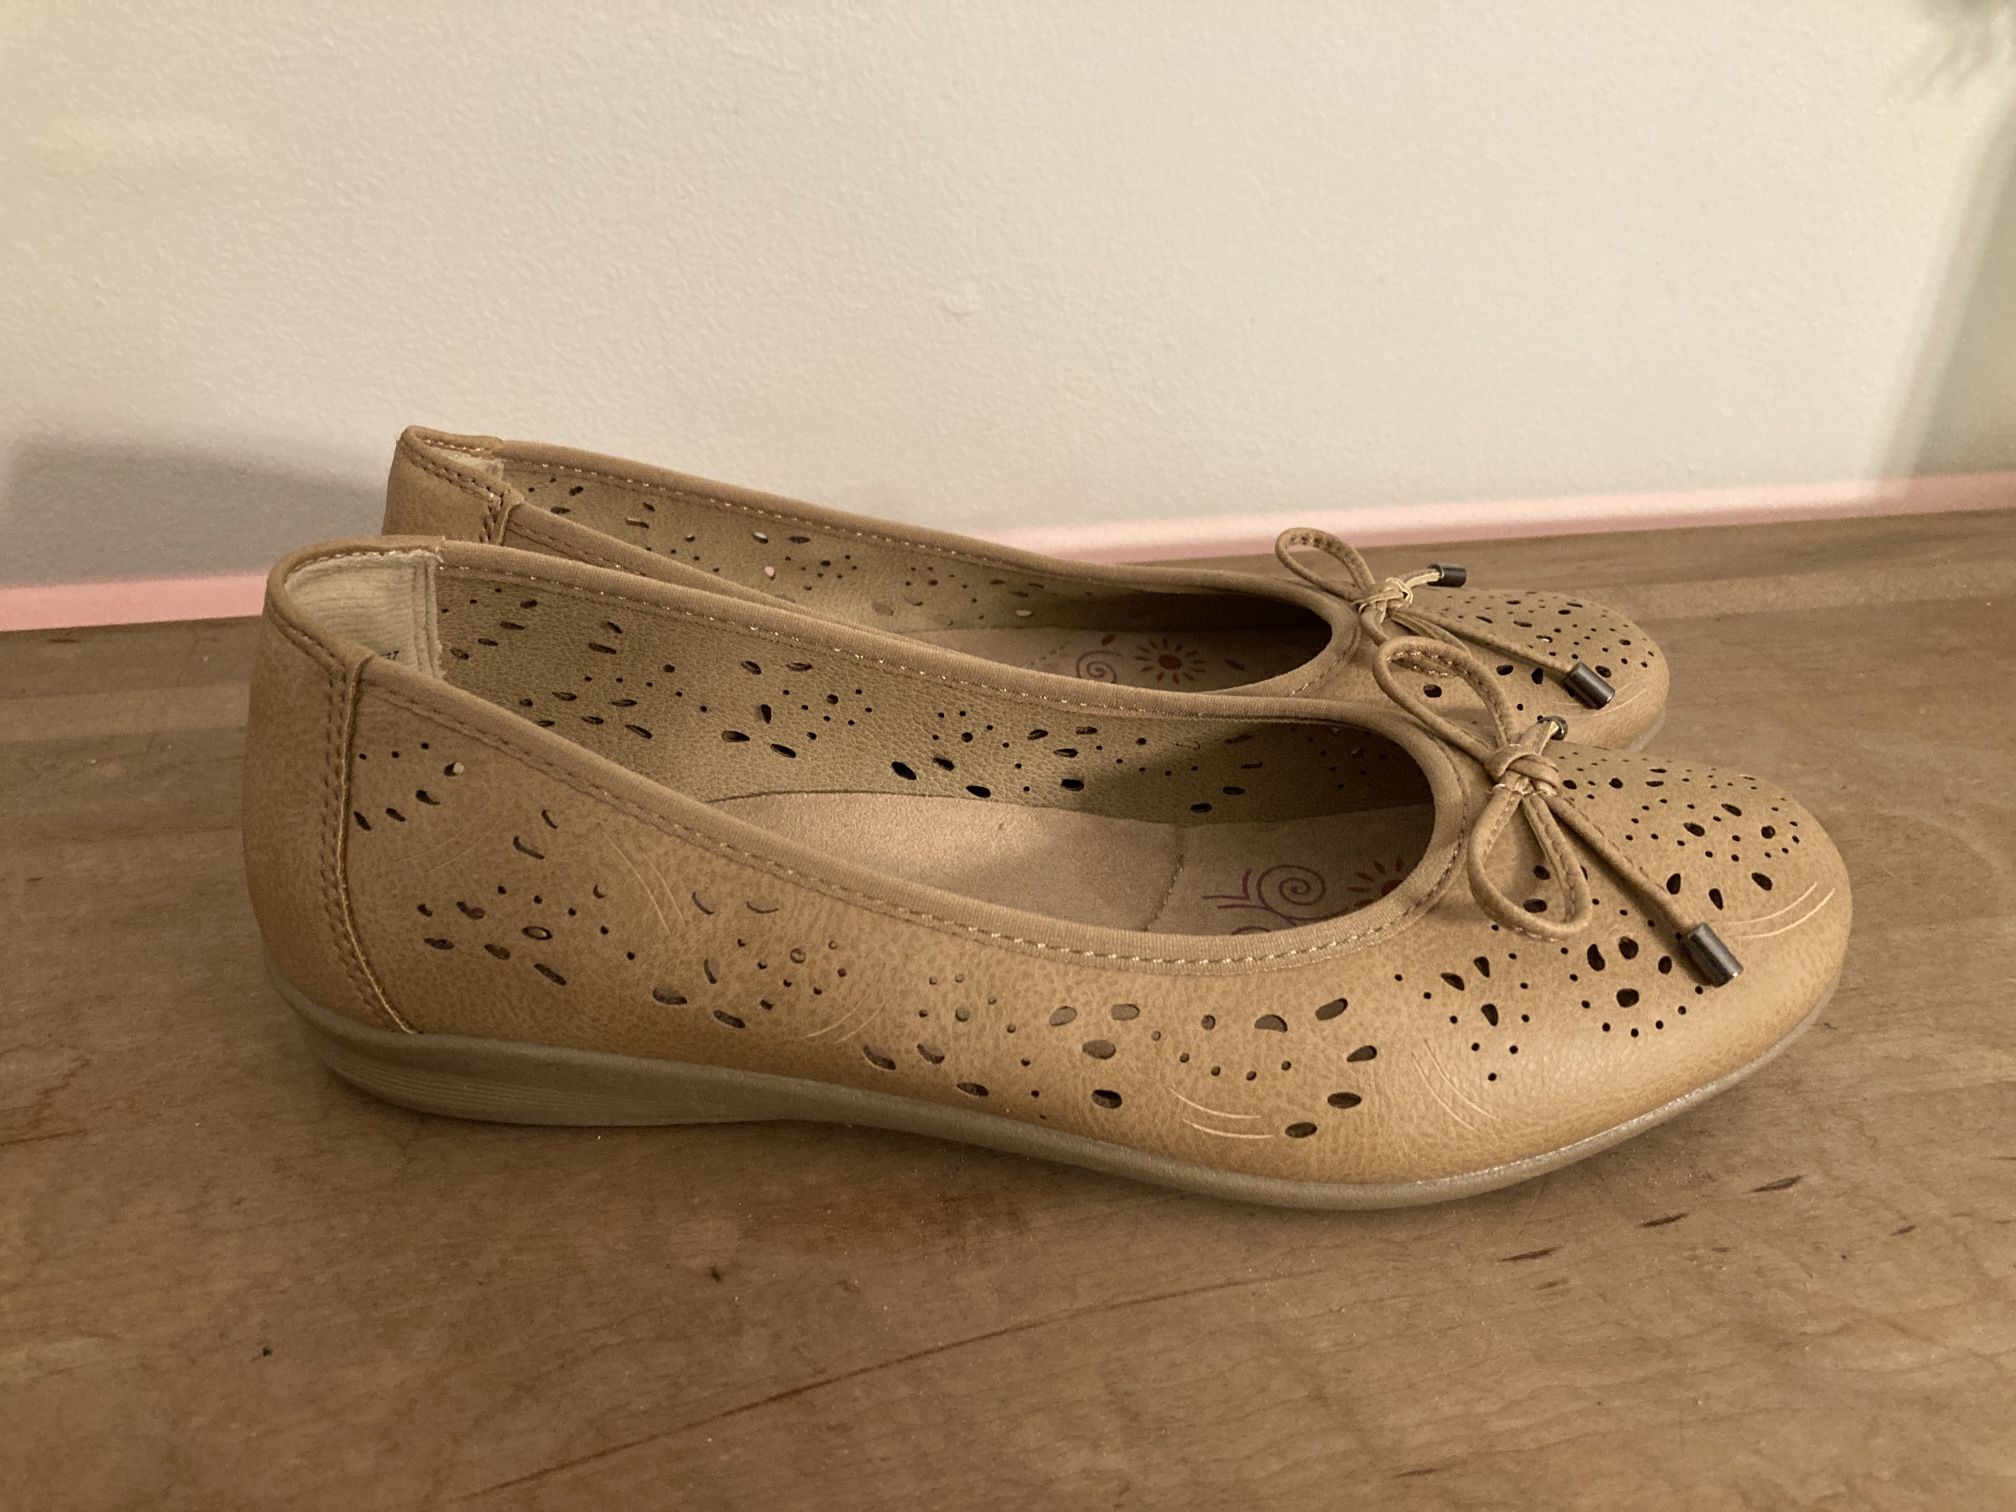 Earth Spirit 8.5 Women's Fashion Ballet Flat shoes beige / tan